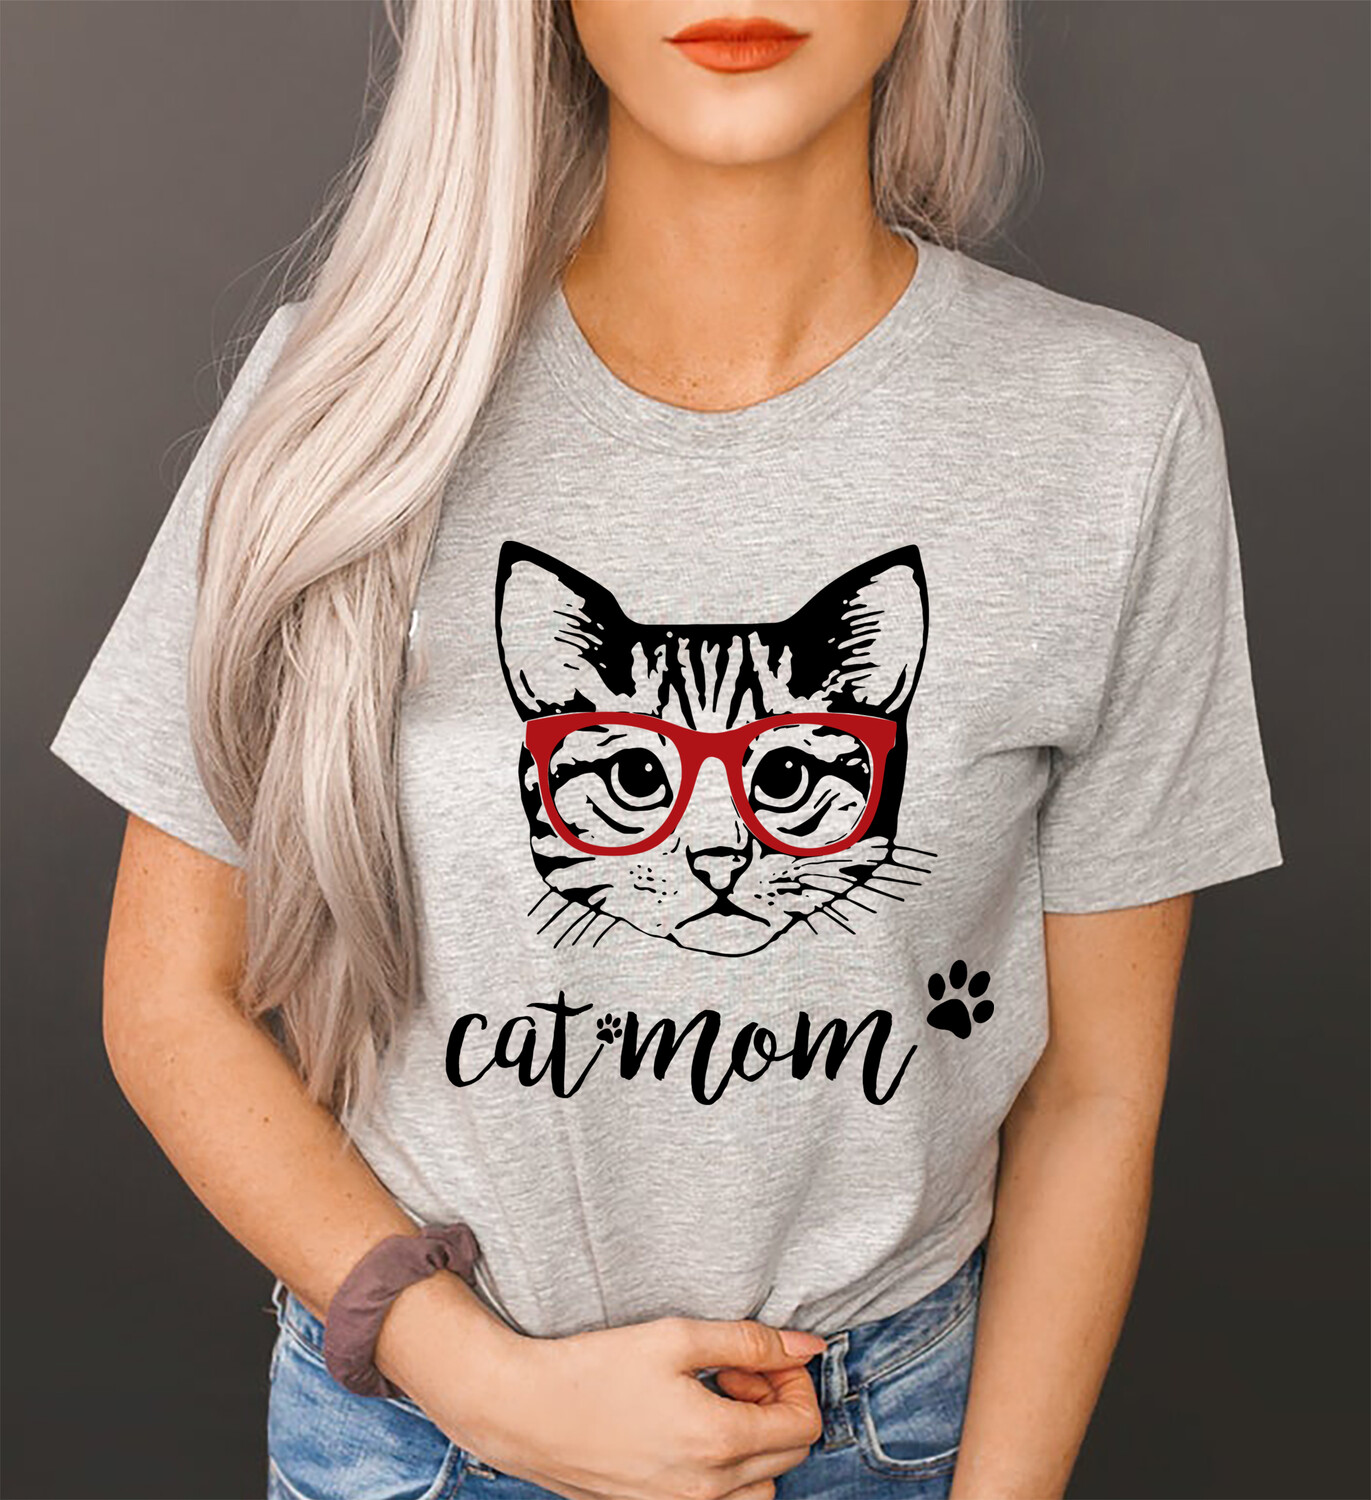 Cat Mom Shirt, Cute Women Shirt, Fur Mom, Fur Mama, Fur Momma, Gift for Her, Crazy Cat Lady shirt, Cat Shirt, cat lover shirt - Unisex T-shirt hoodie Sweatshirt - Gift for mother's day